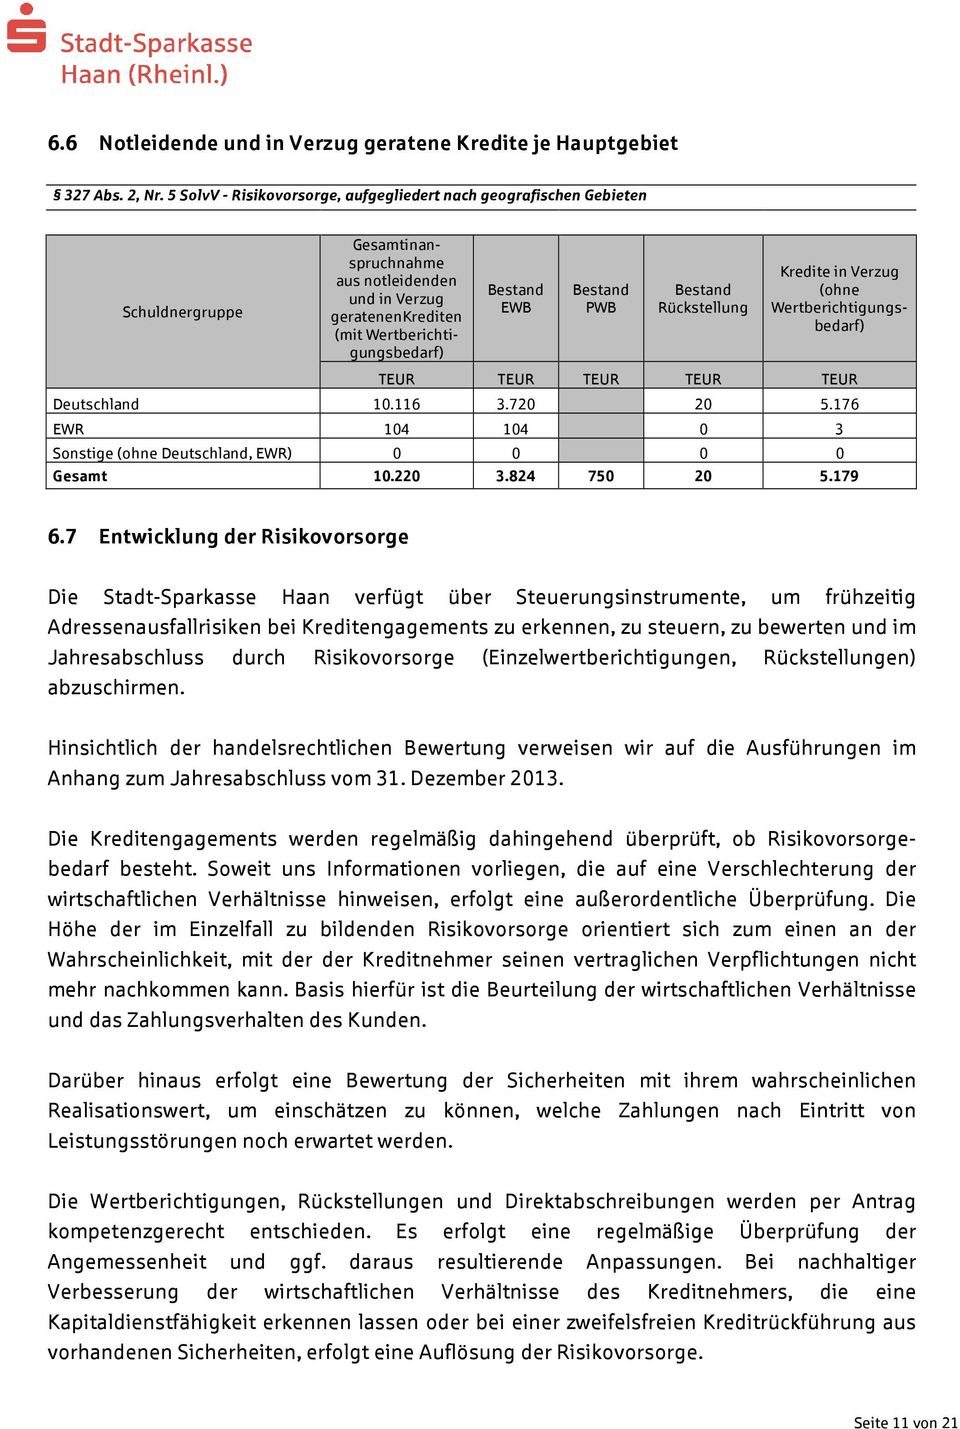 Bestand PWB Bestand Rückstellung Kredite in Verzug (ohne Wertberichtigungsbedarf) TEUR TEUR TEUR TEUR TEUR Deutschland 10.116 3.720 20 5.